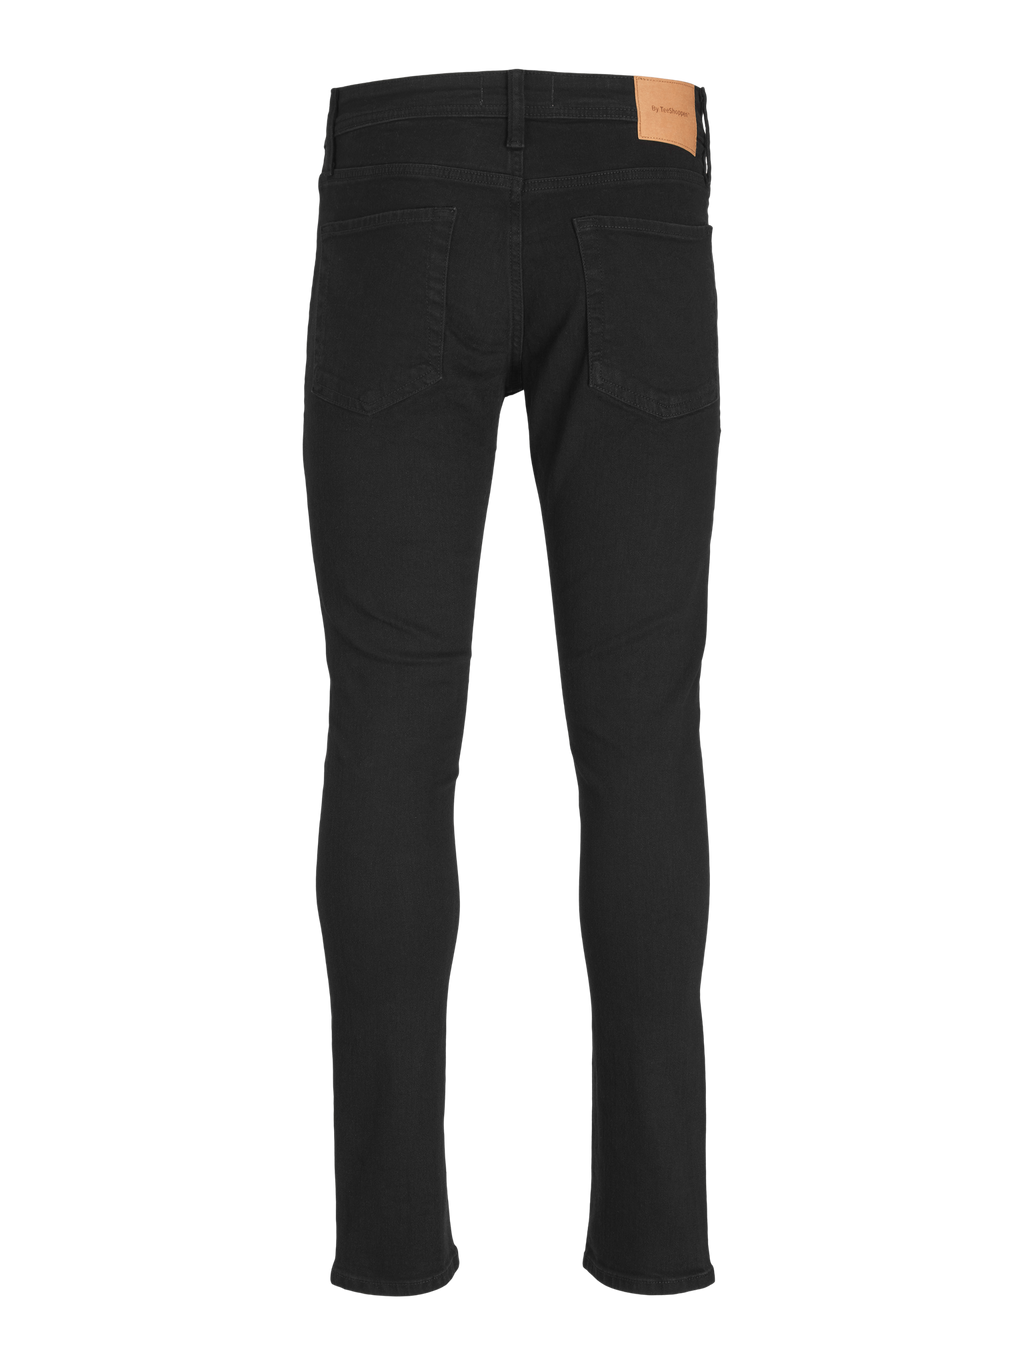 Performance Jeans (Slim) - Black Denim